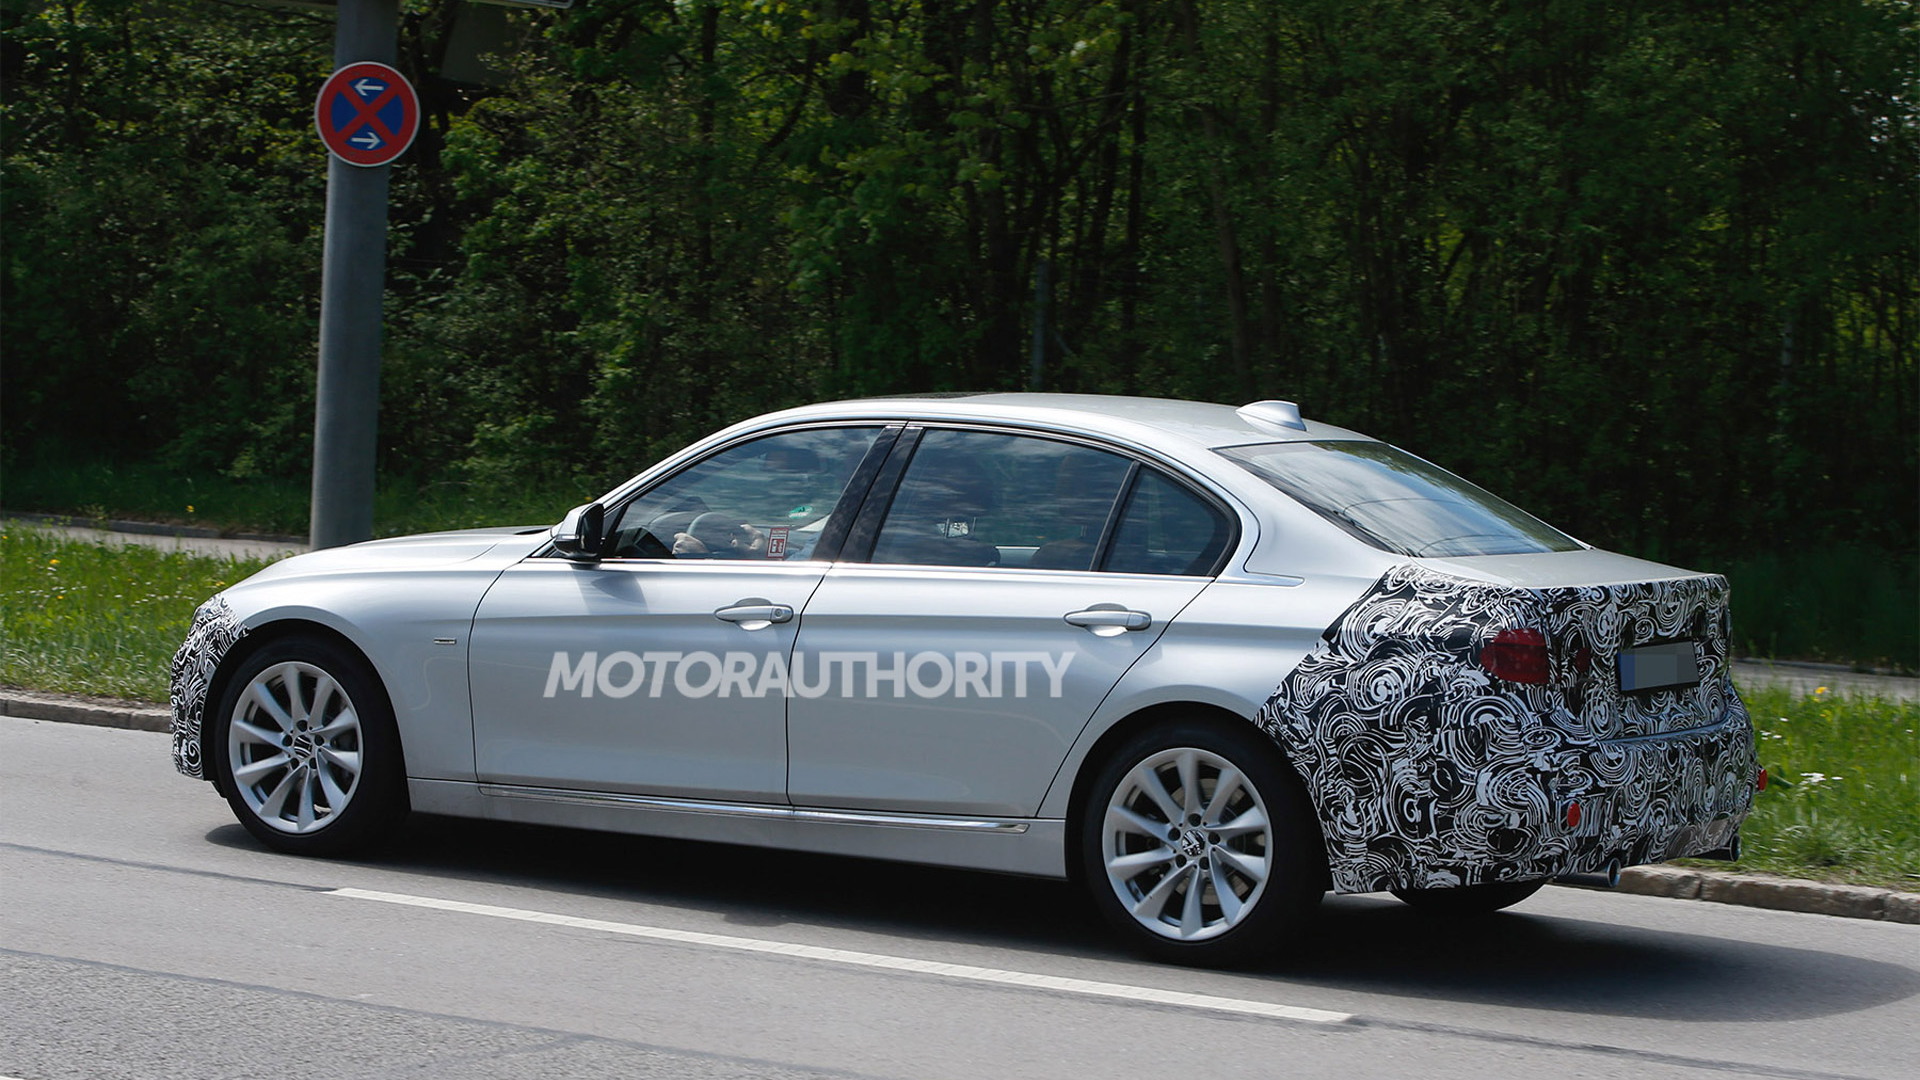 2016 BMW 3-Series long-wheelbase model facelift spy shots - Image via S. Baldauf/SB-Medien